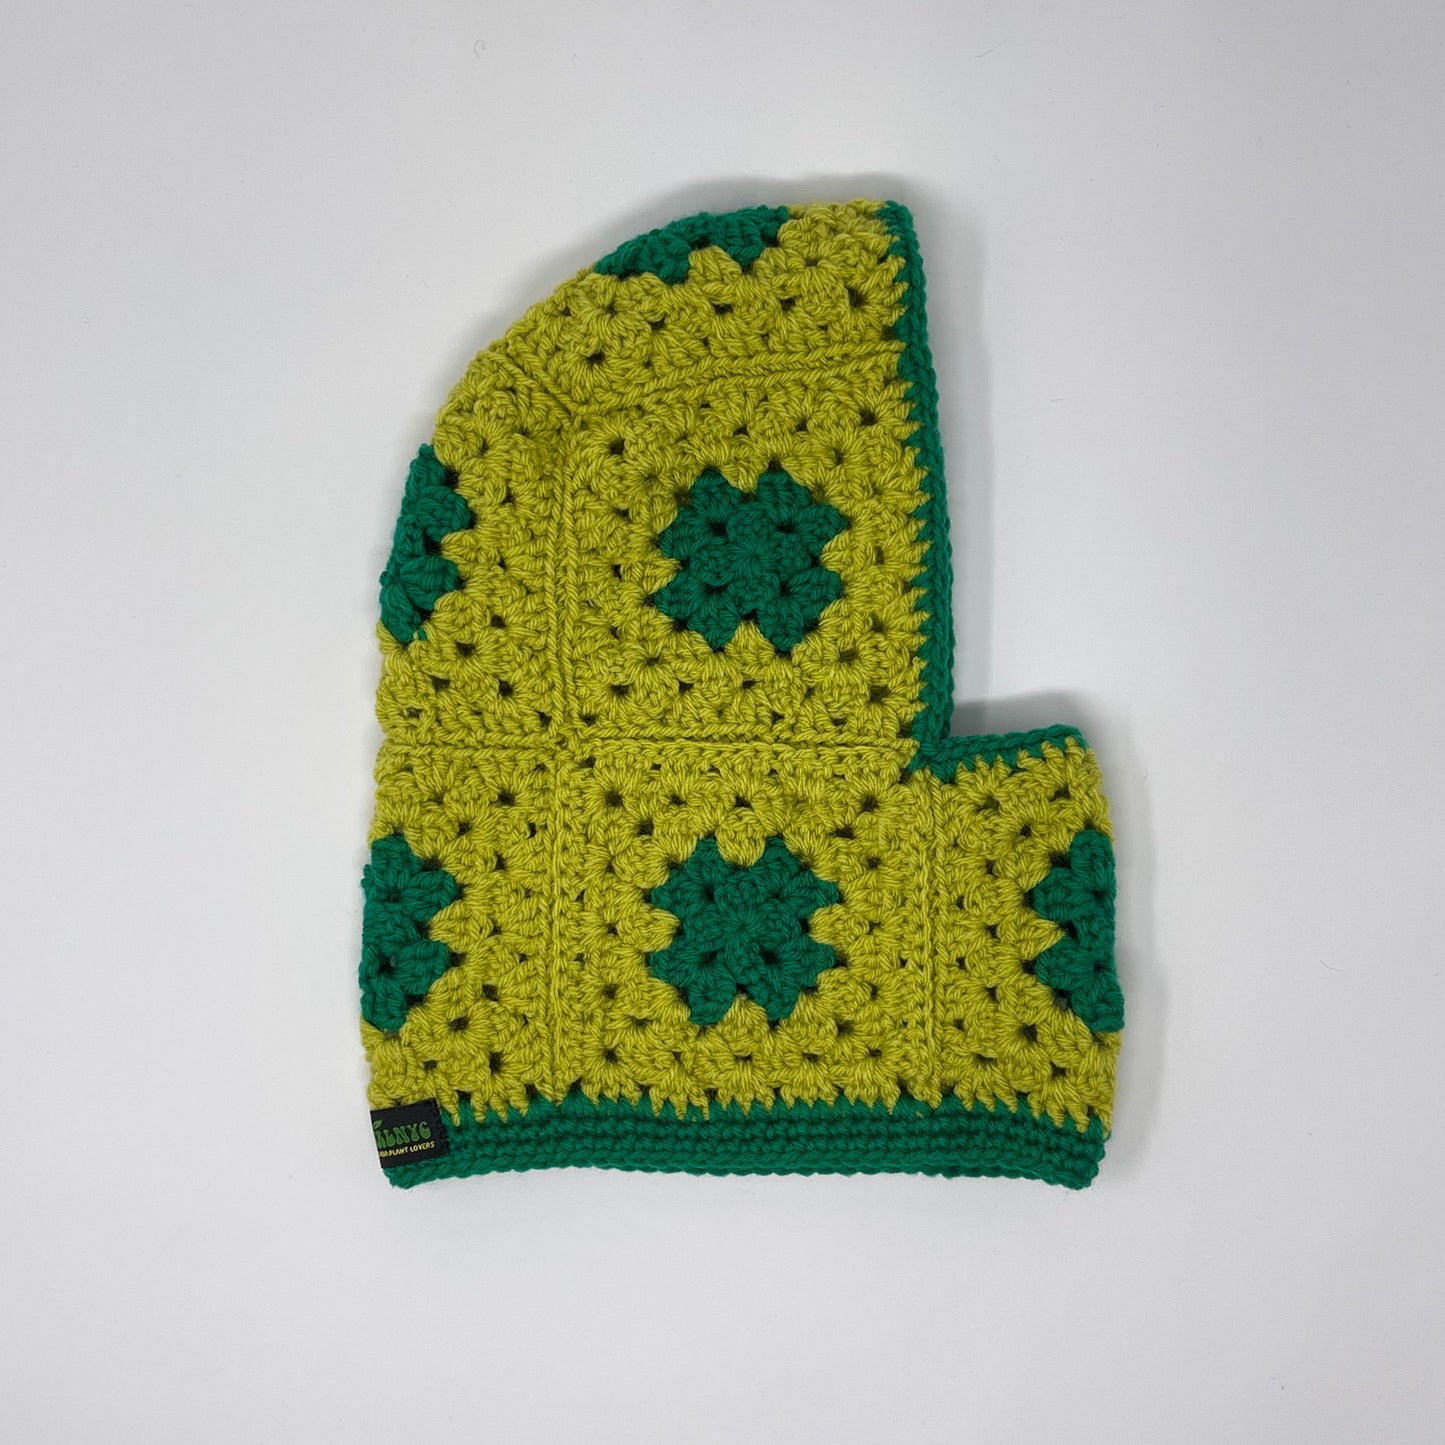 Crochet Balaclava - Lime & Green